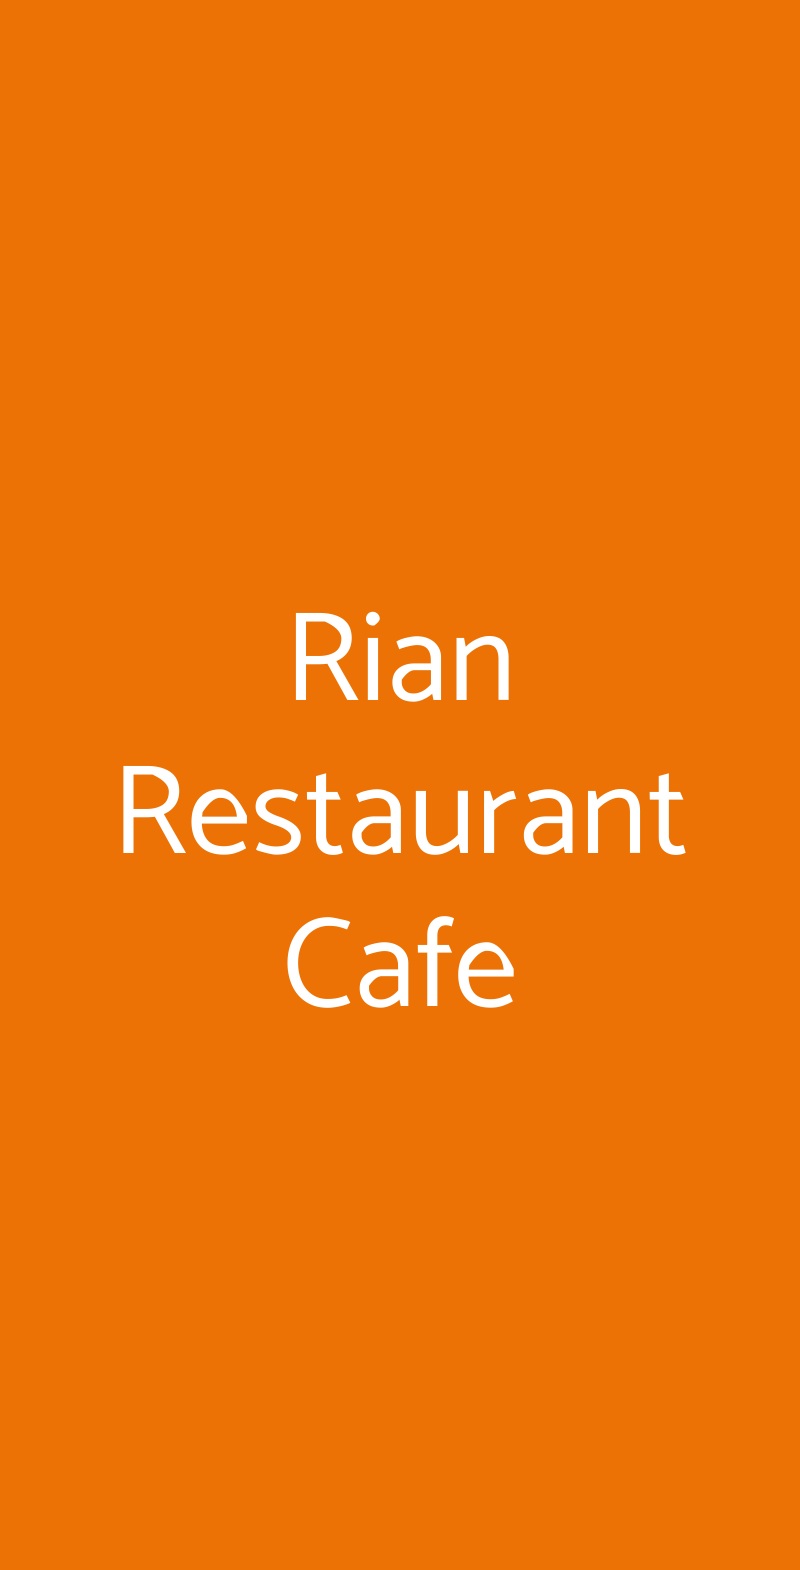 Rian Restaurant Cafe Inzago menù 1 pagina